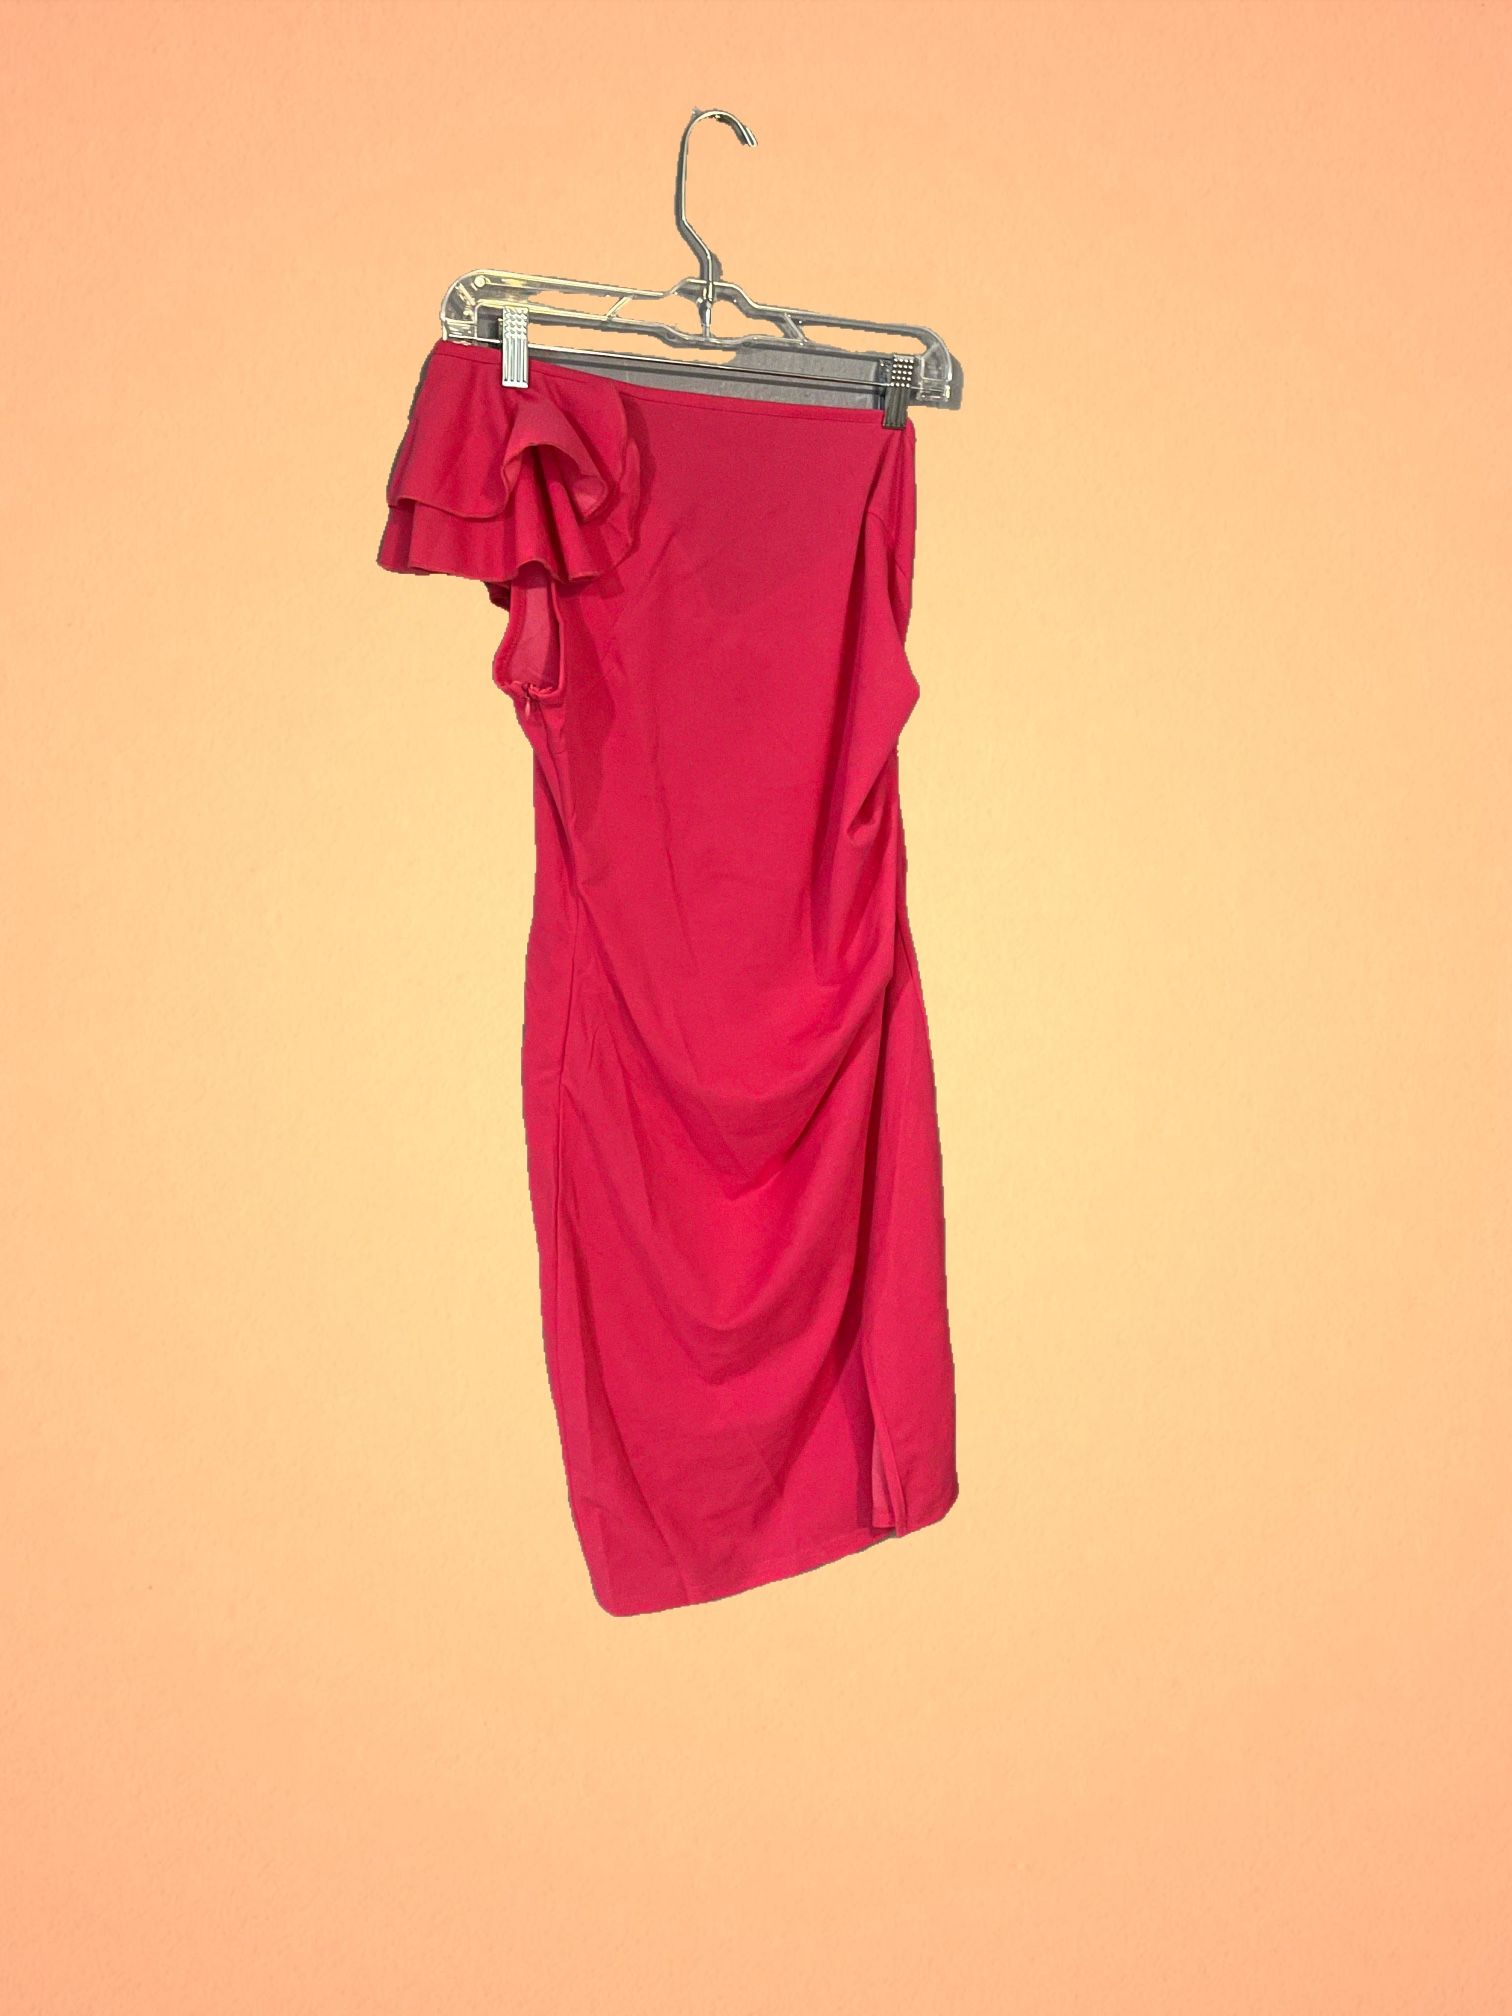 1 Sholder Pink Dress Size medium/large